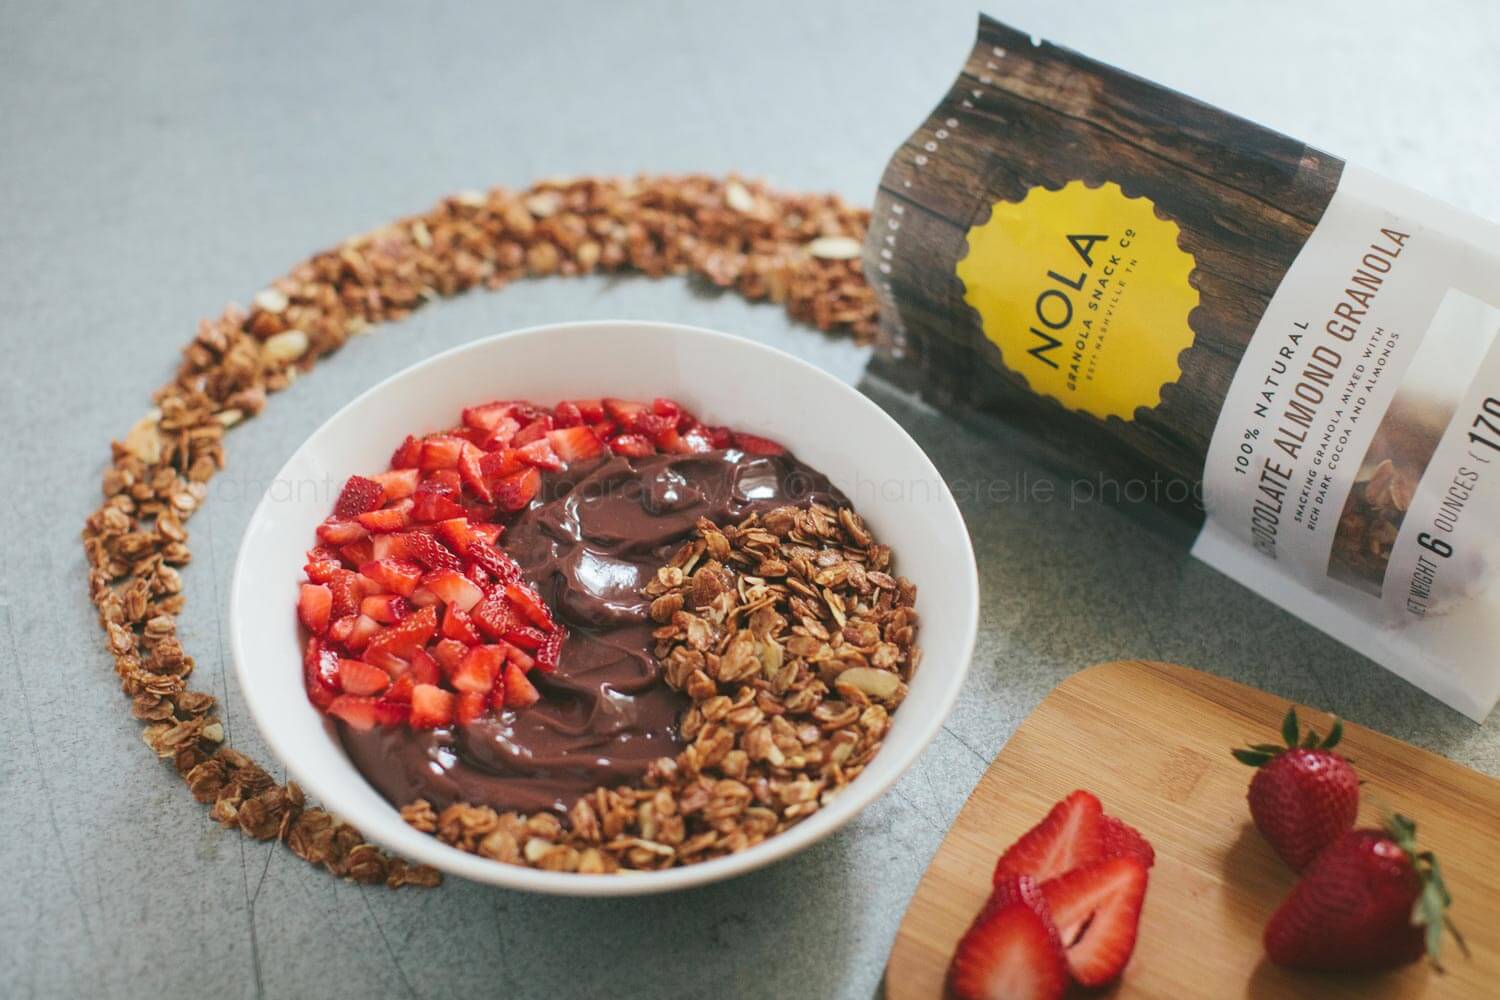 nola granola chocolate pudding bowl with strawberries